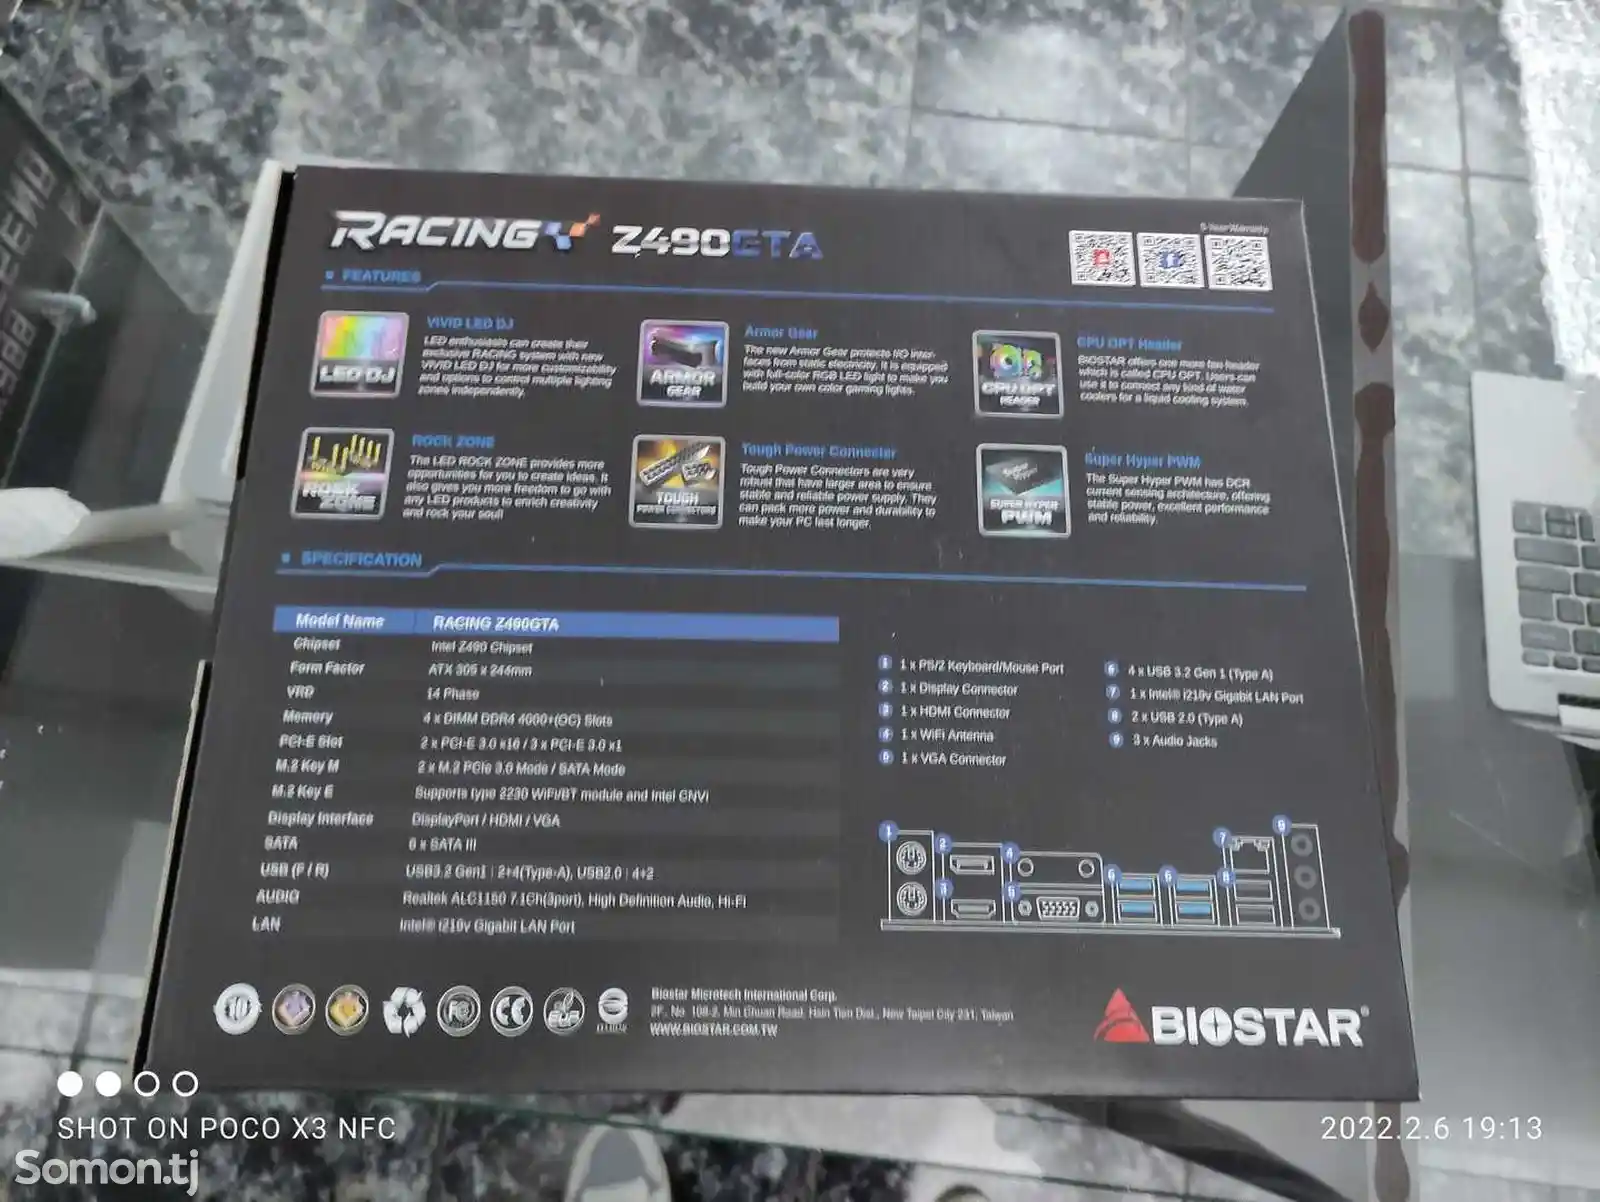 Материнская Плата Biostar Racing Z490-GTA LGA 1200-3